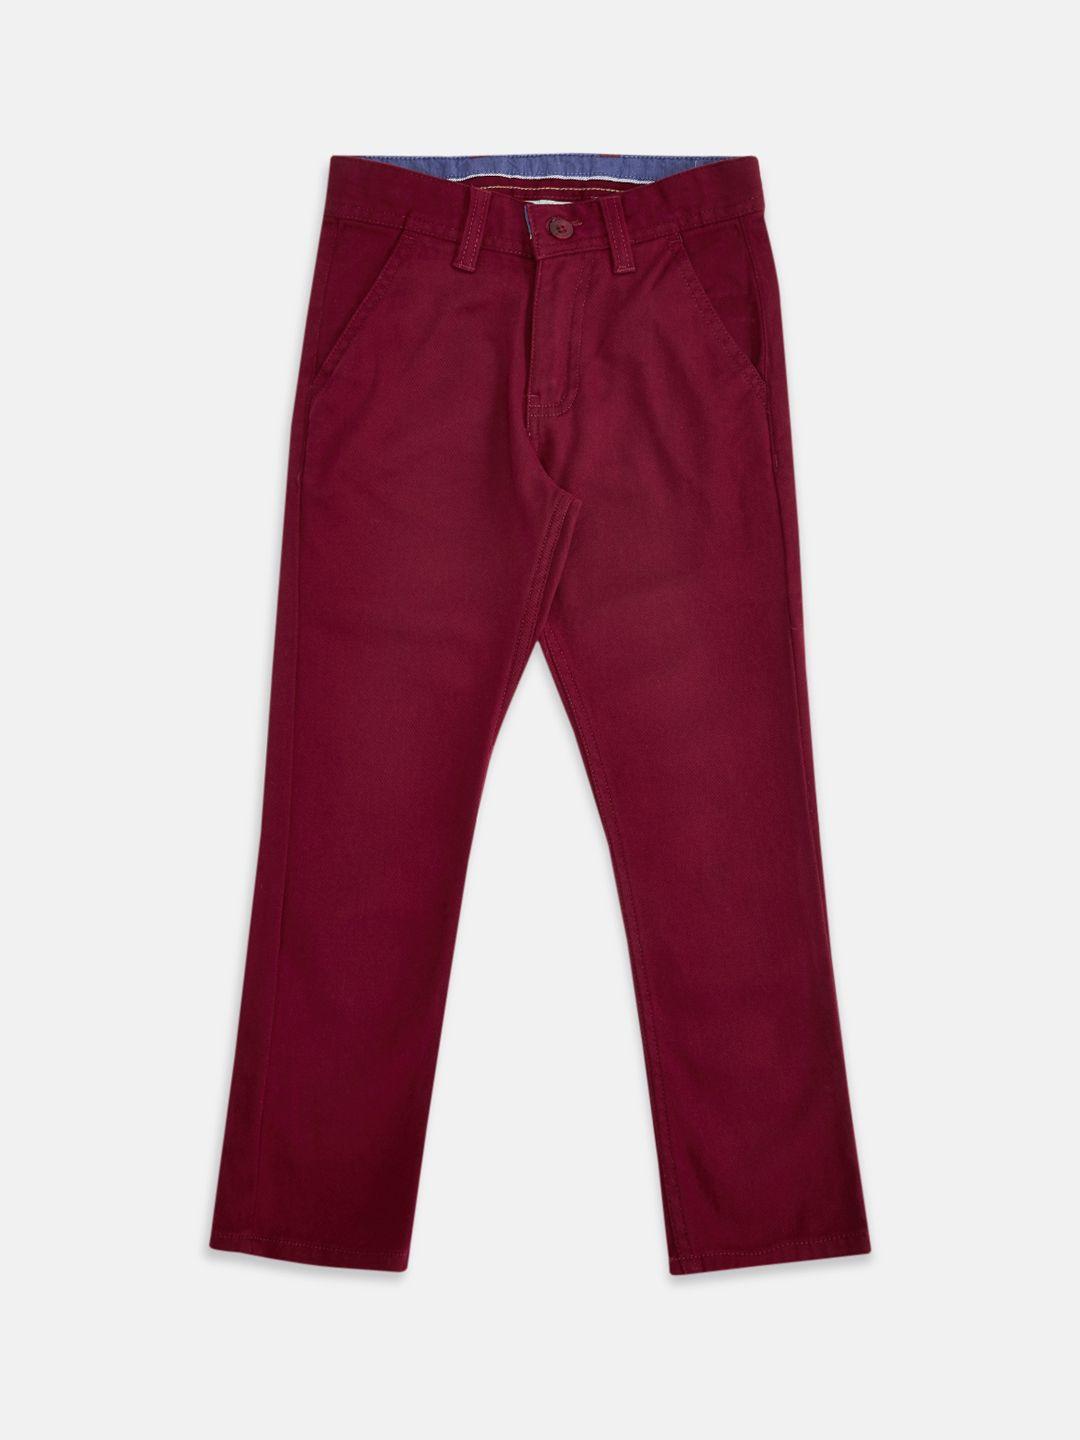 pantaloons-junior-boys-maroon-solid-cotton-chinos-trouser